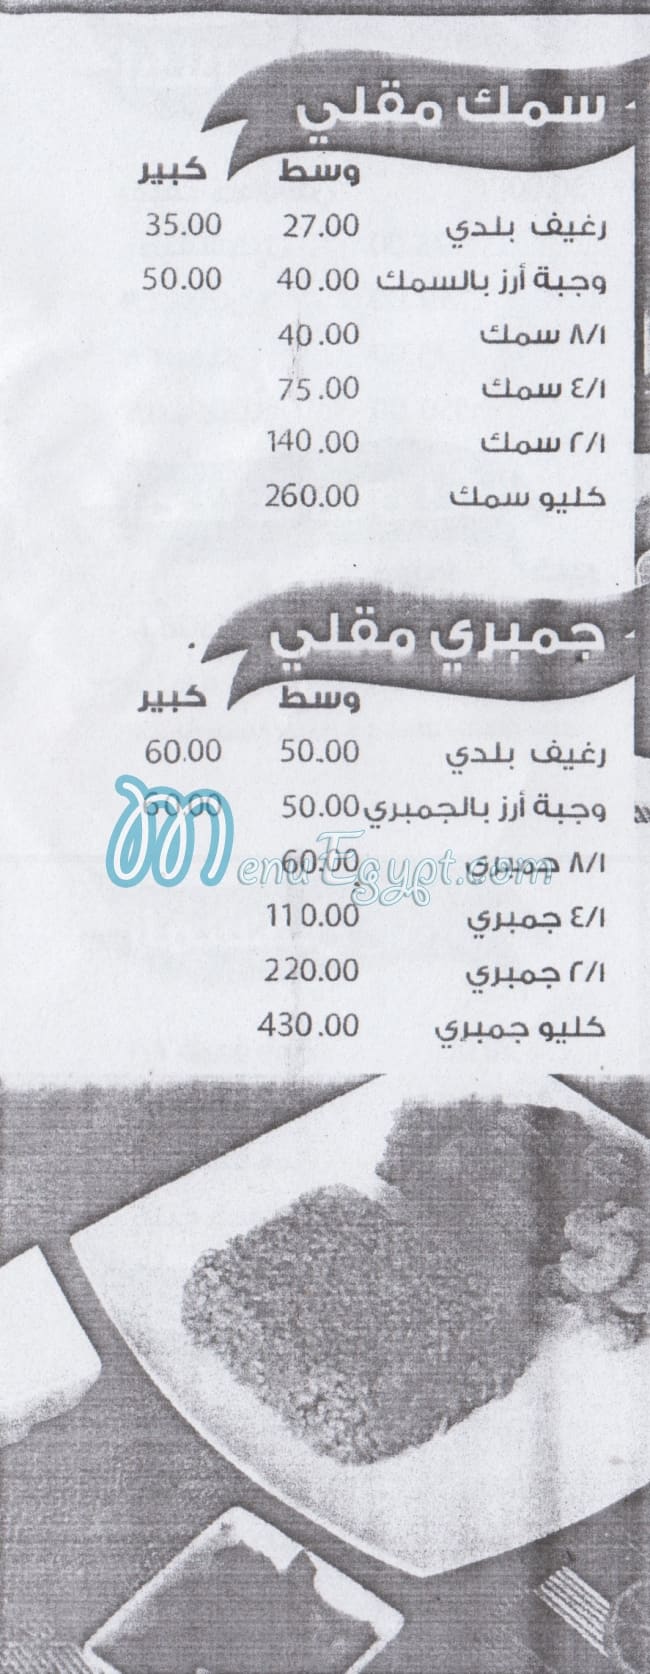 Kebda We Mokh El Mahrosa menu Egypt